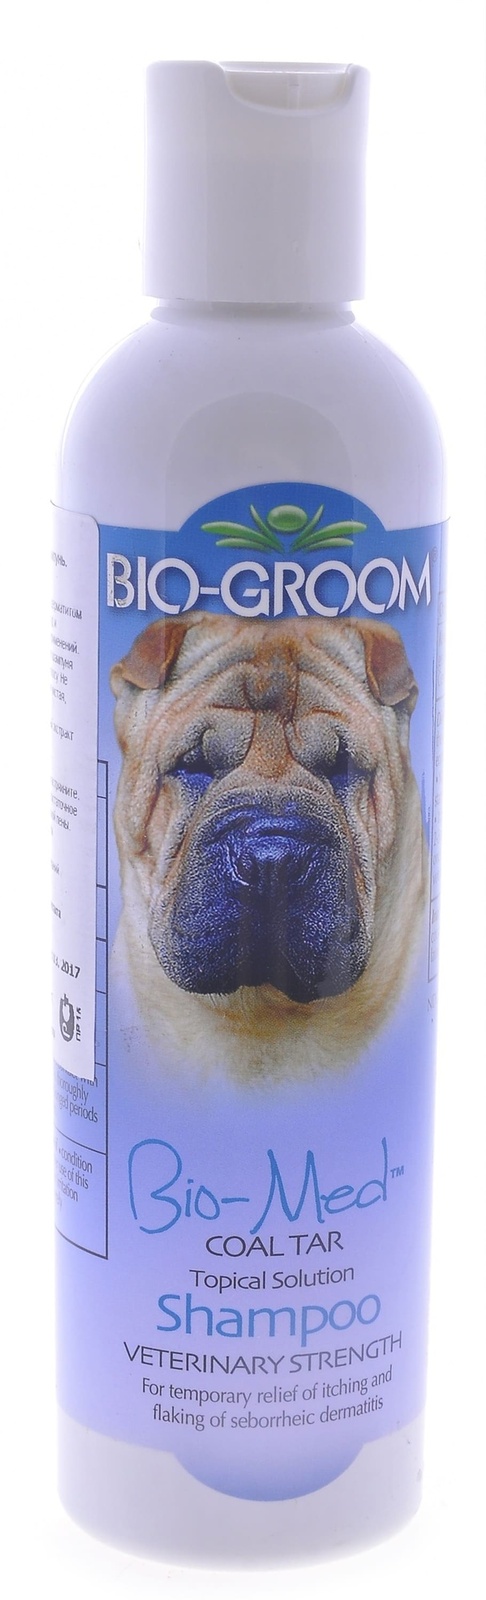 Biogroom дегтярно-серный шампунь, Bio-Med Shampoo (236 г) Biogroom Biogroom дегтярно-серный шампунь, Bio-Med Shampoo (236 г) - фото 1